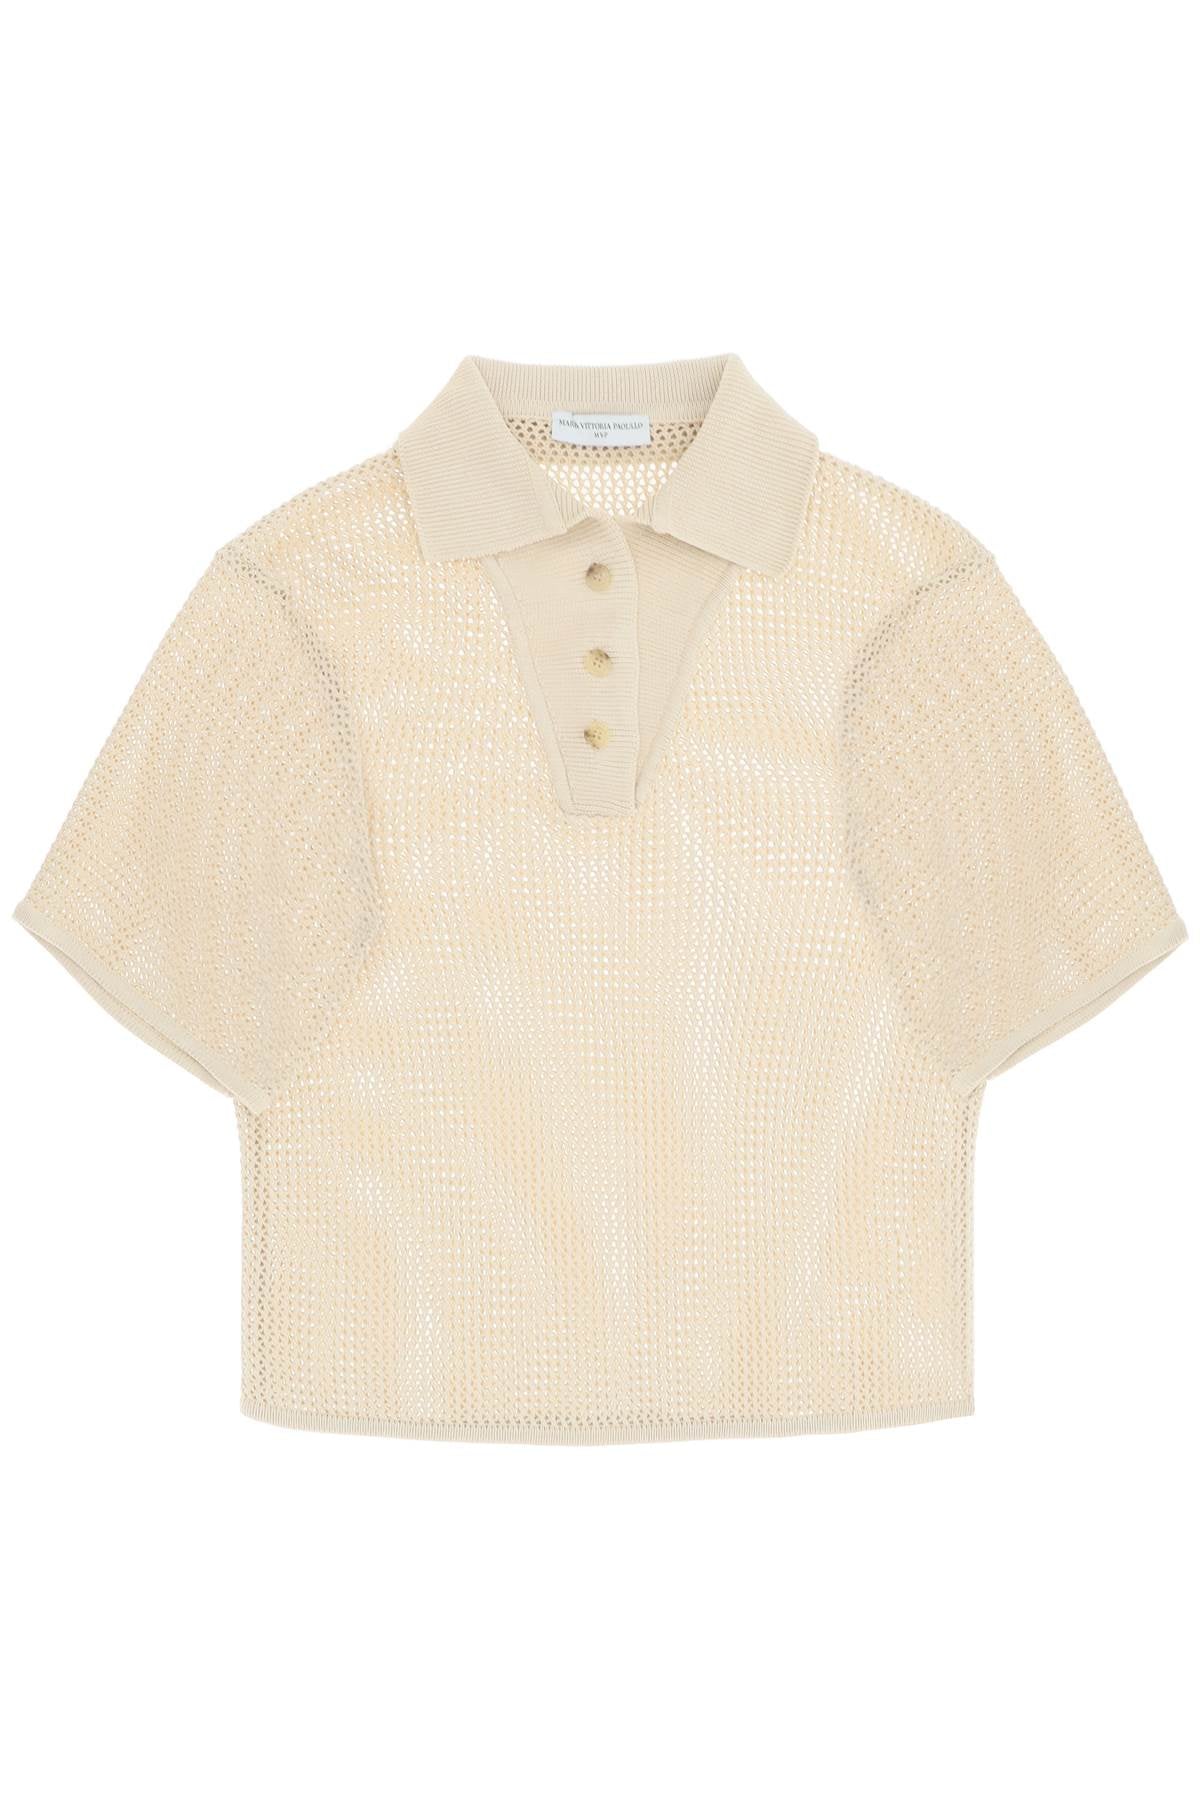 Mvp wardrobe 'pfeiffer' stretch knit polo shirt-0